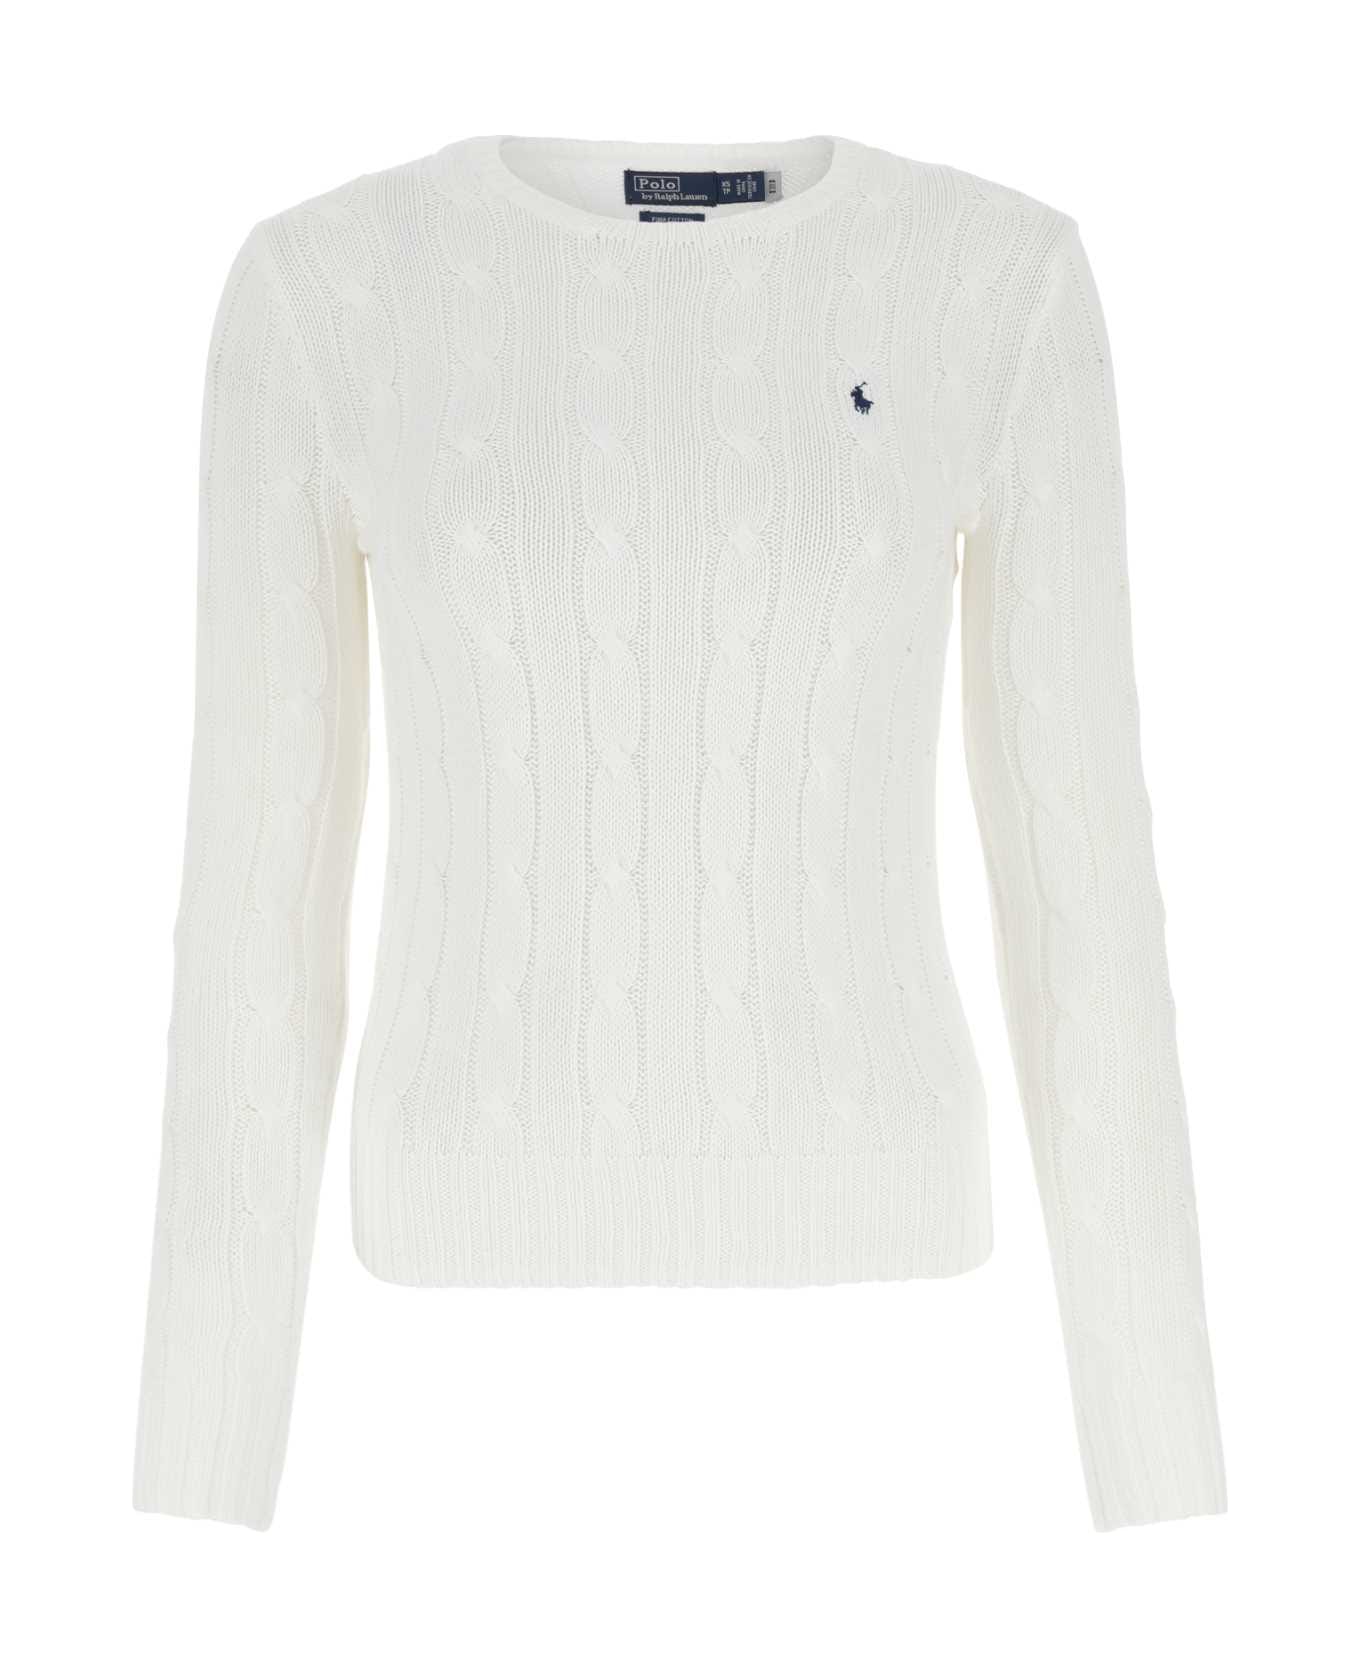 Polo Ralph Lauren White Cotton Sweater - White